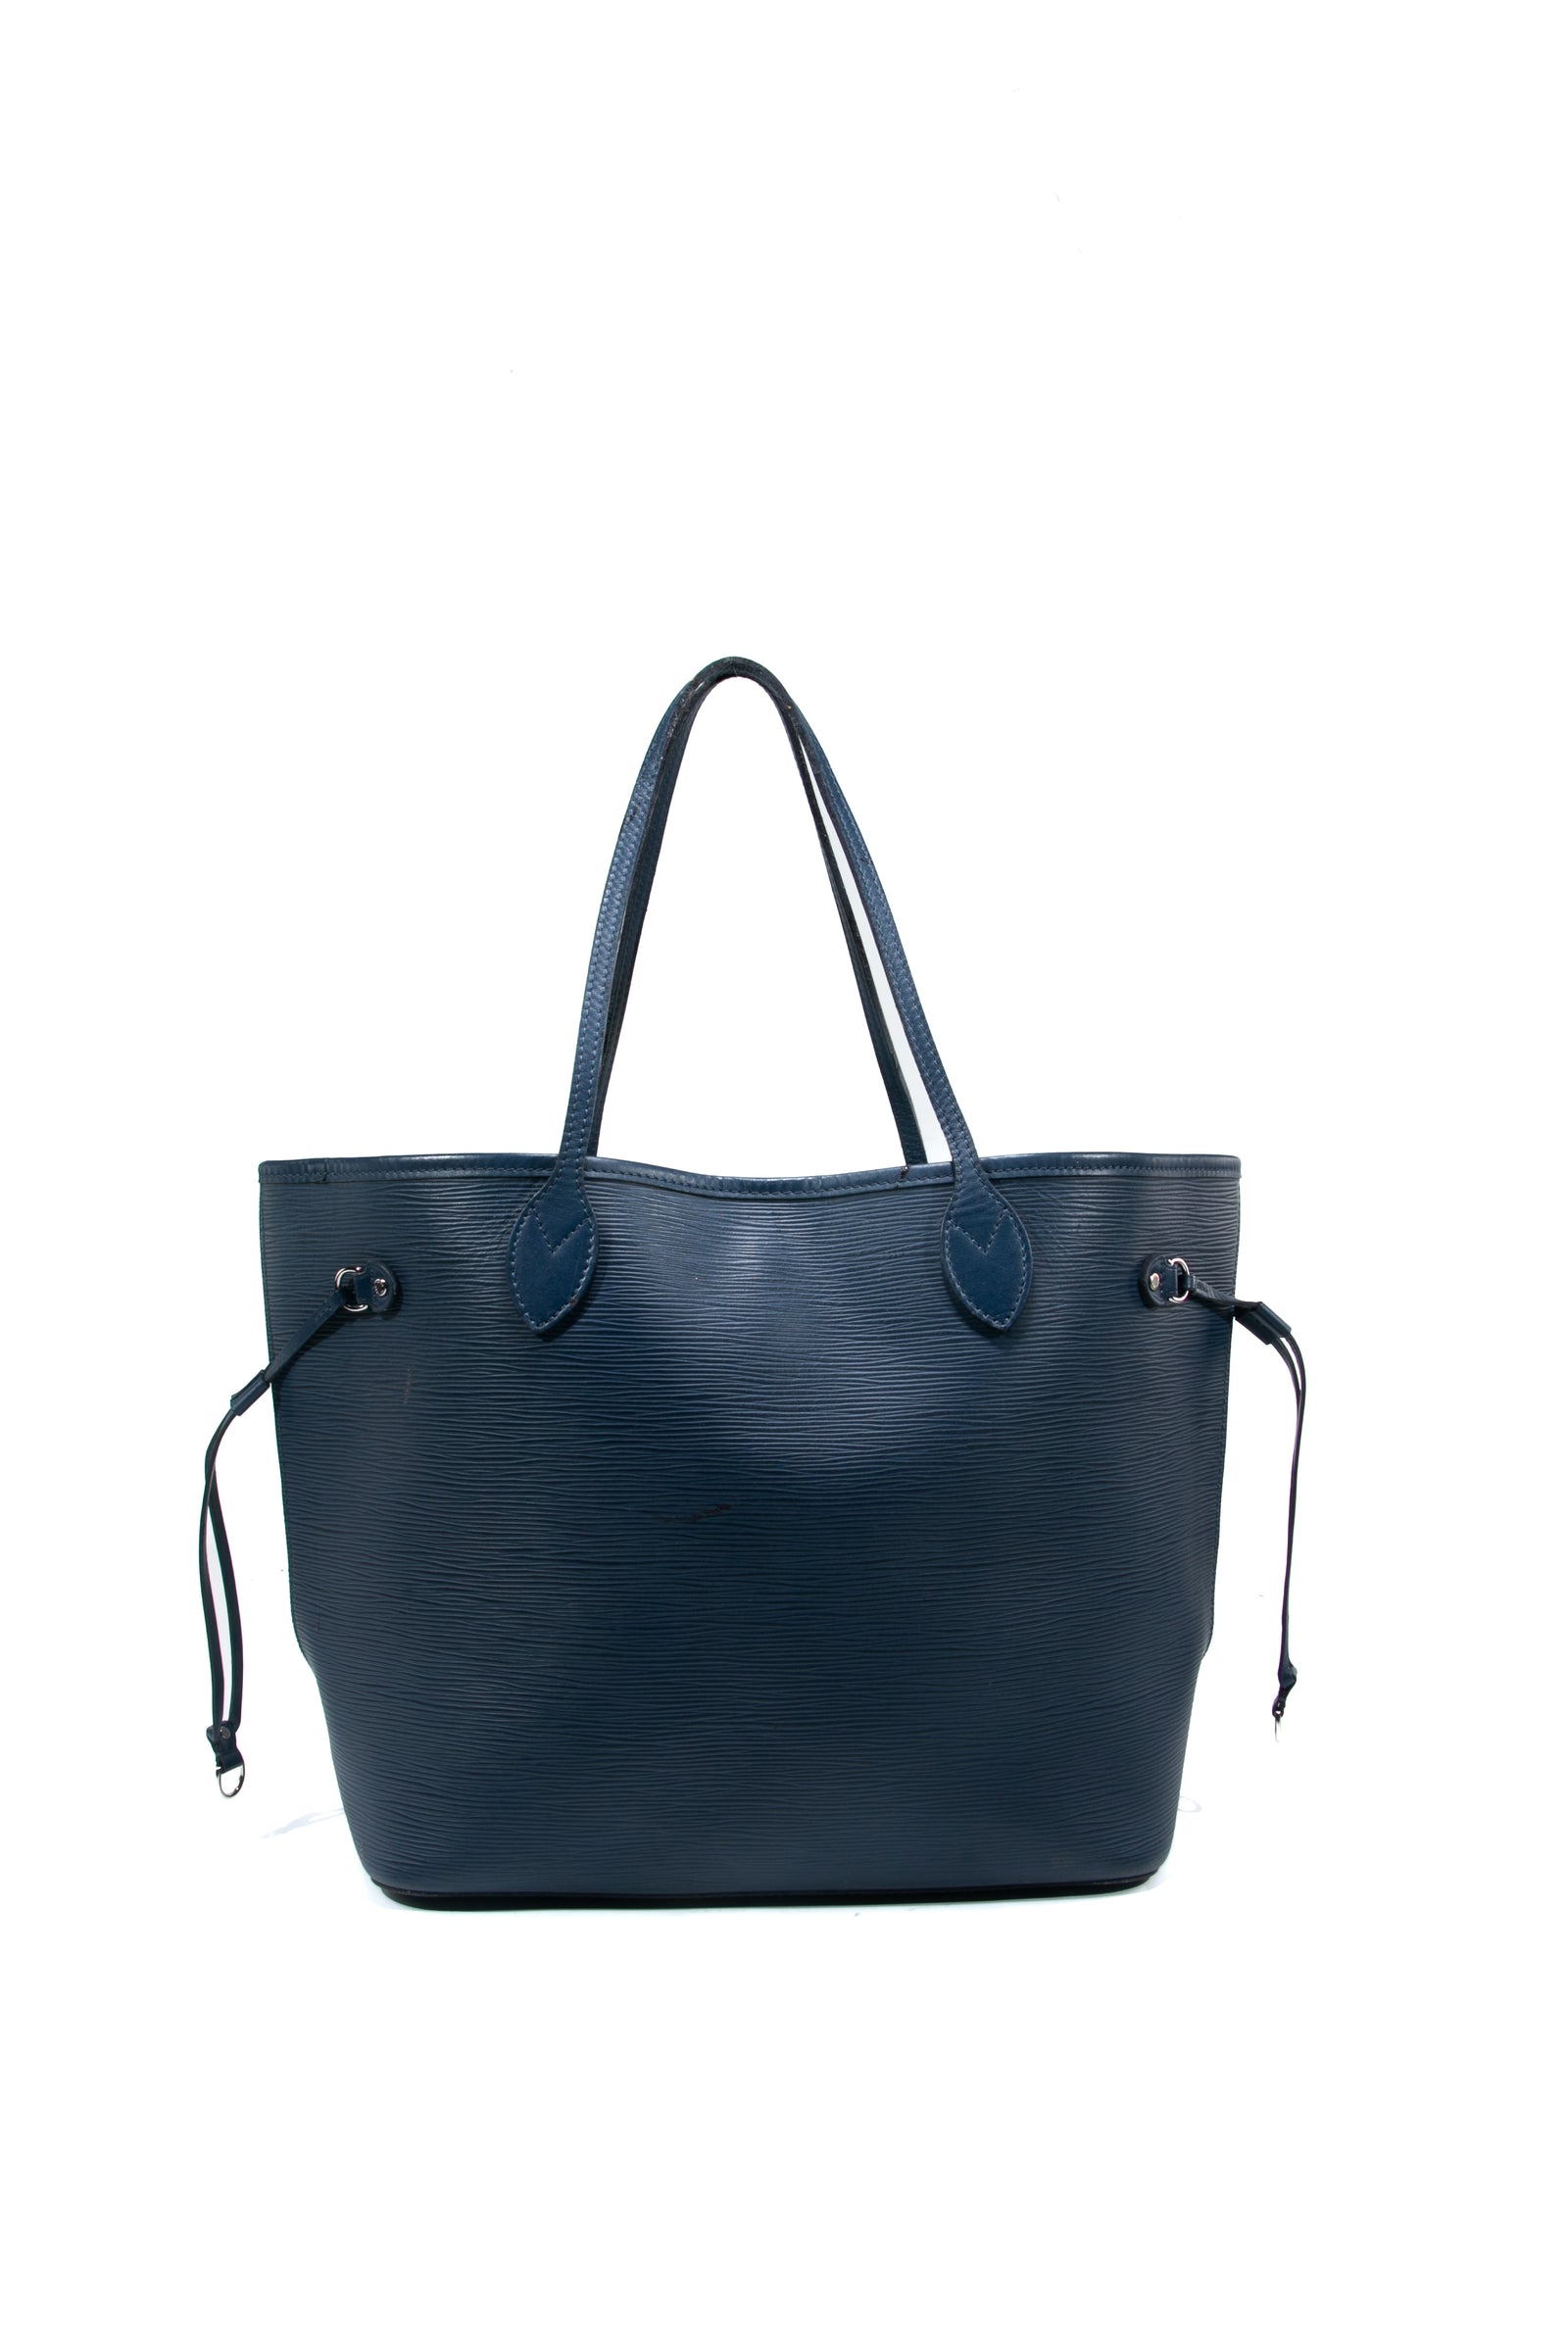 Louis Vuitton - Authenticated Beach Handbag - Plastic Green for Women, Never Worn